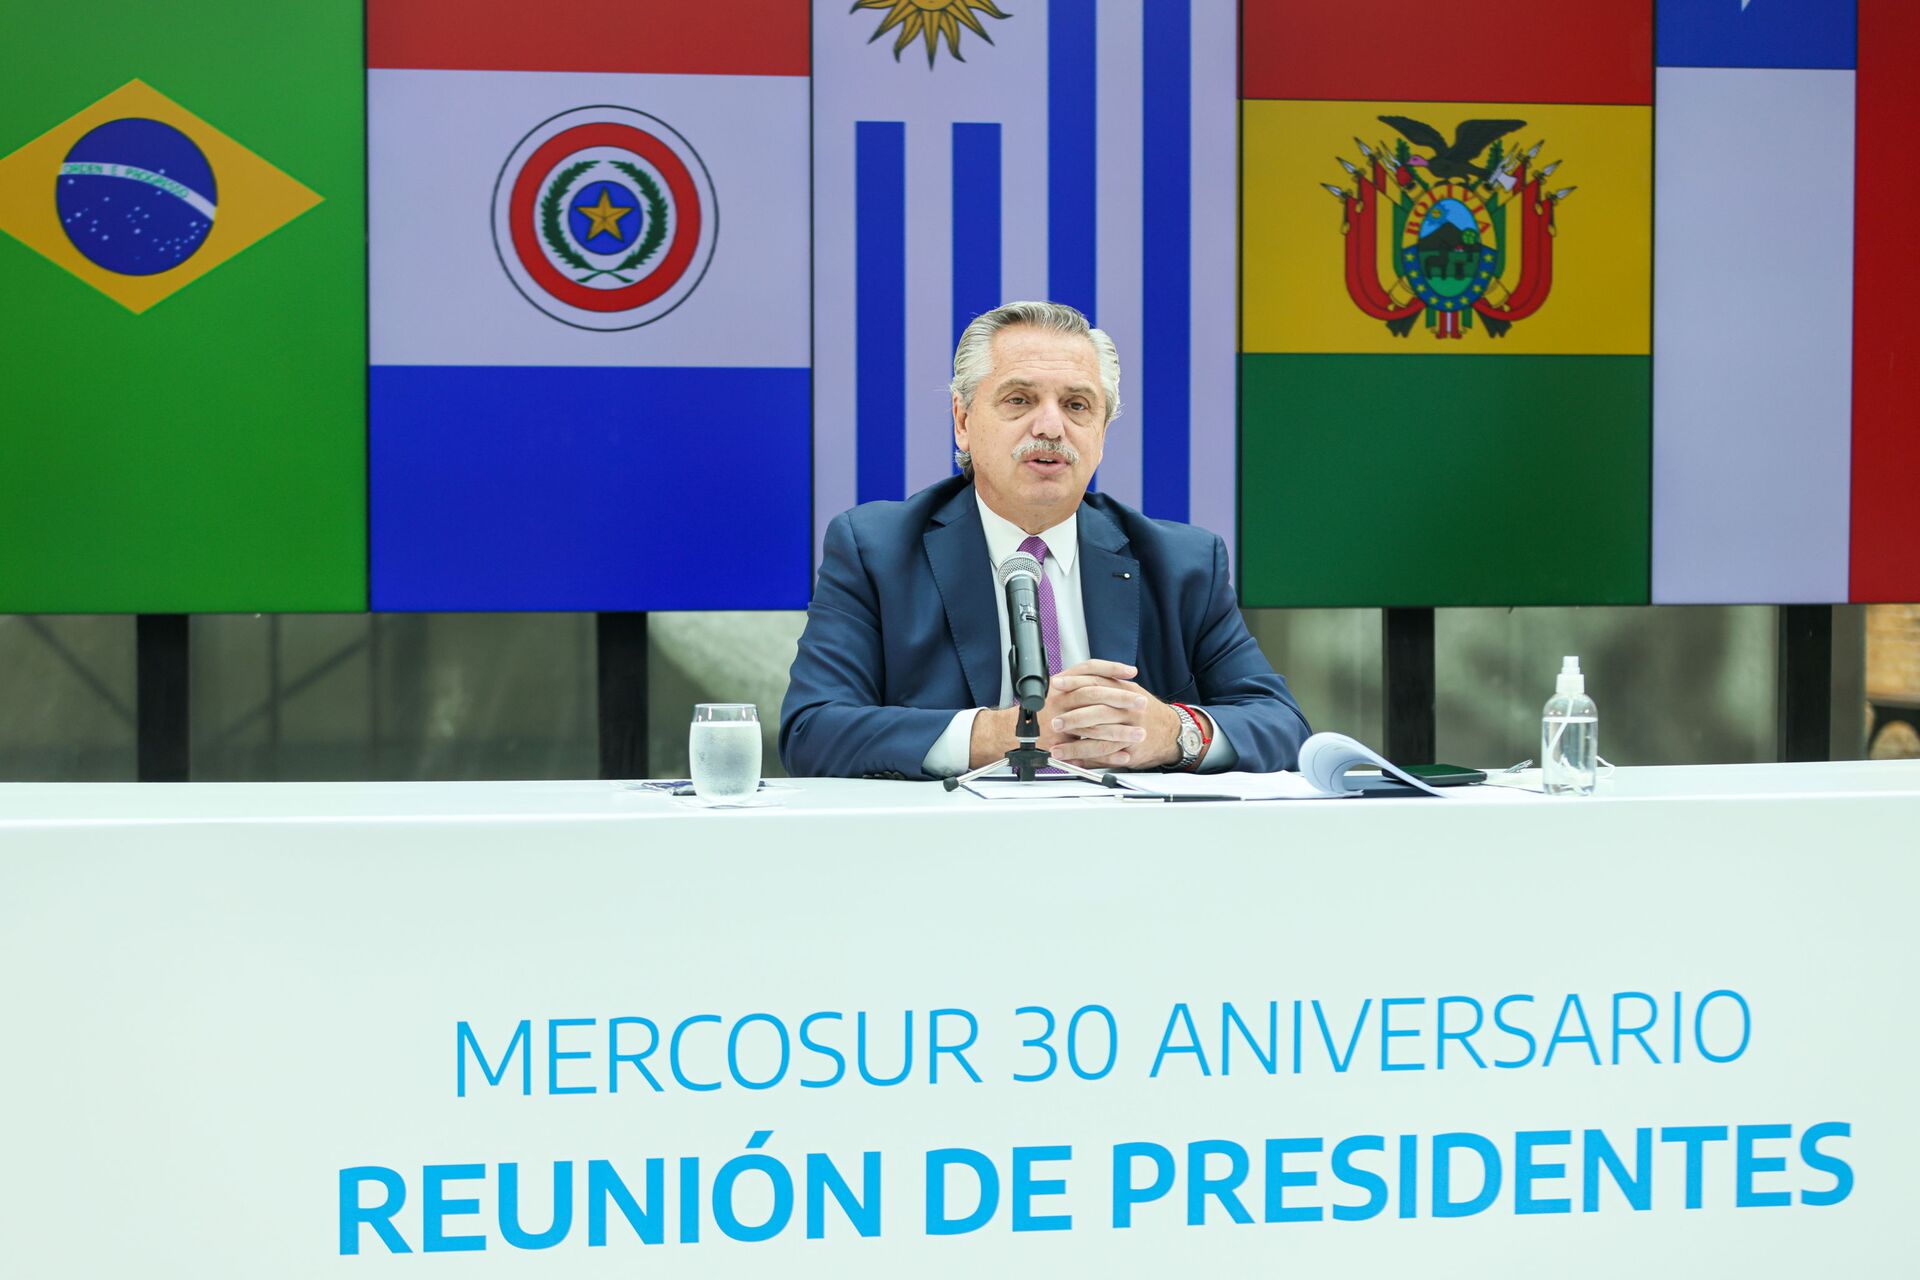 O presidente argentino Alberto Fernández participa da cúpula virtual de 30 anos do Mercosul - Sputnik Brasil, 1920, 09.11.2021